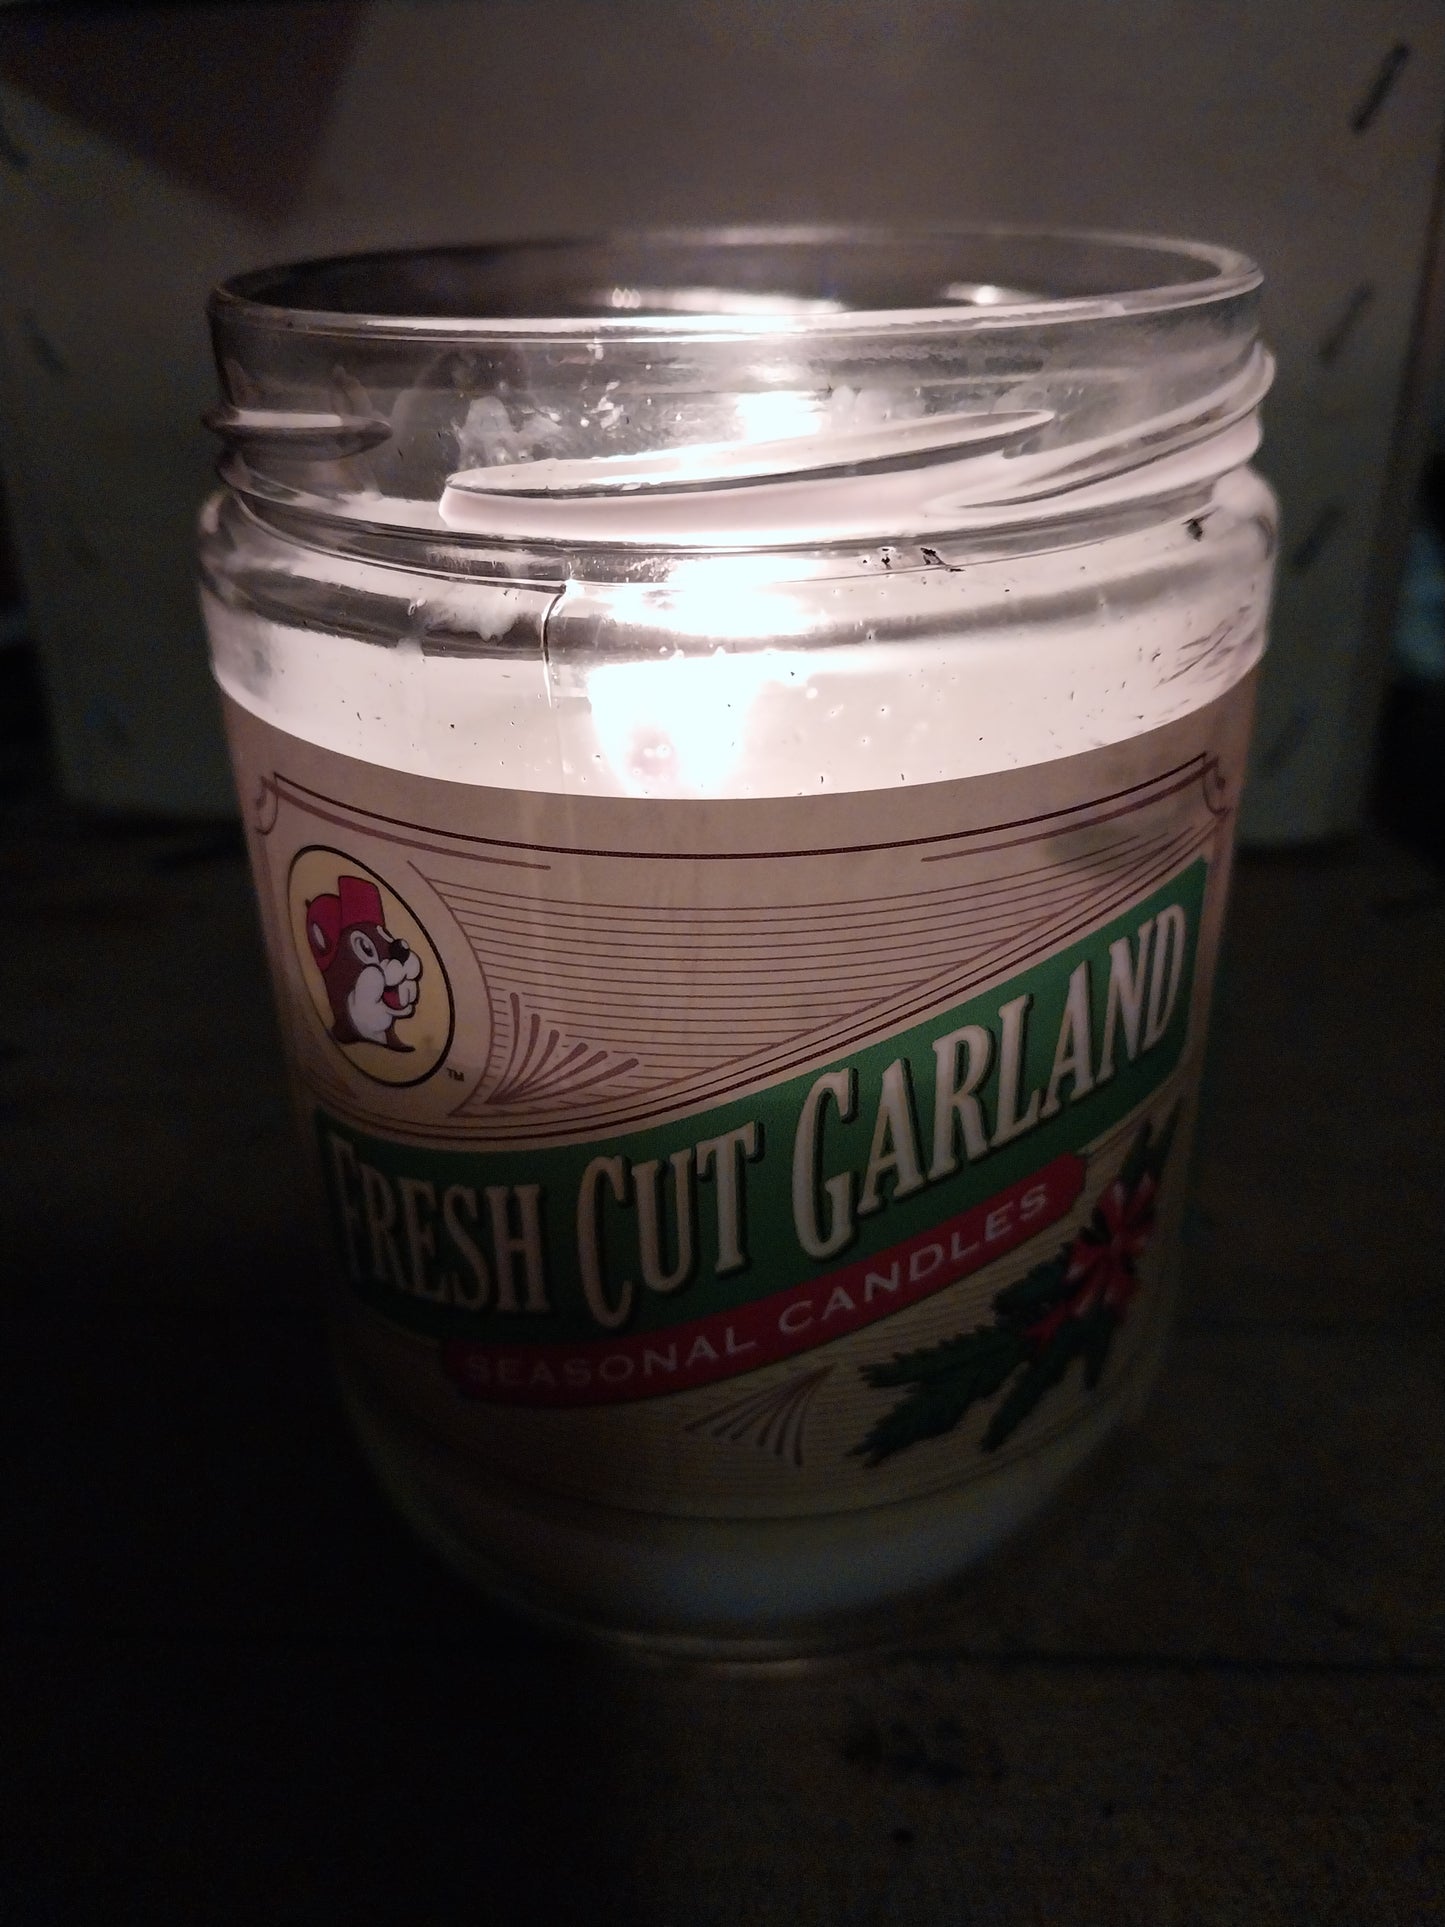 Buc-ee's Fresh Cut Garland Long Burning Scented Seasonal Candle